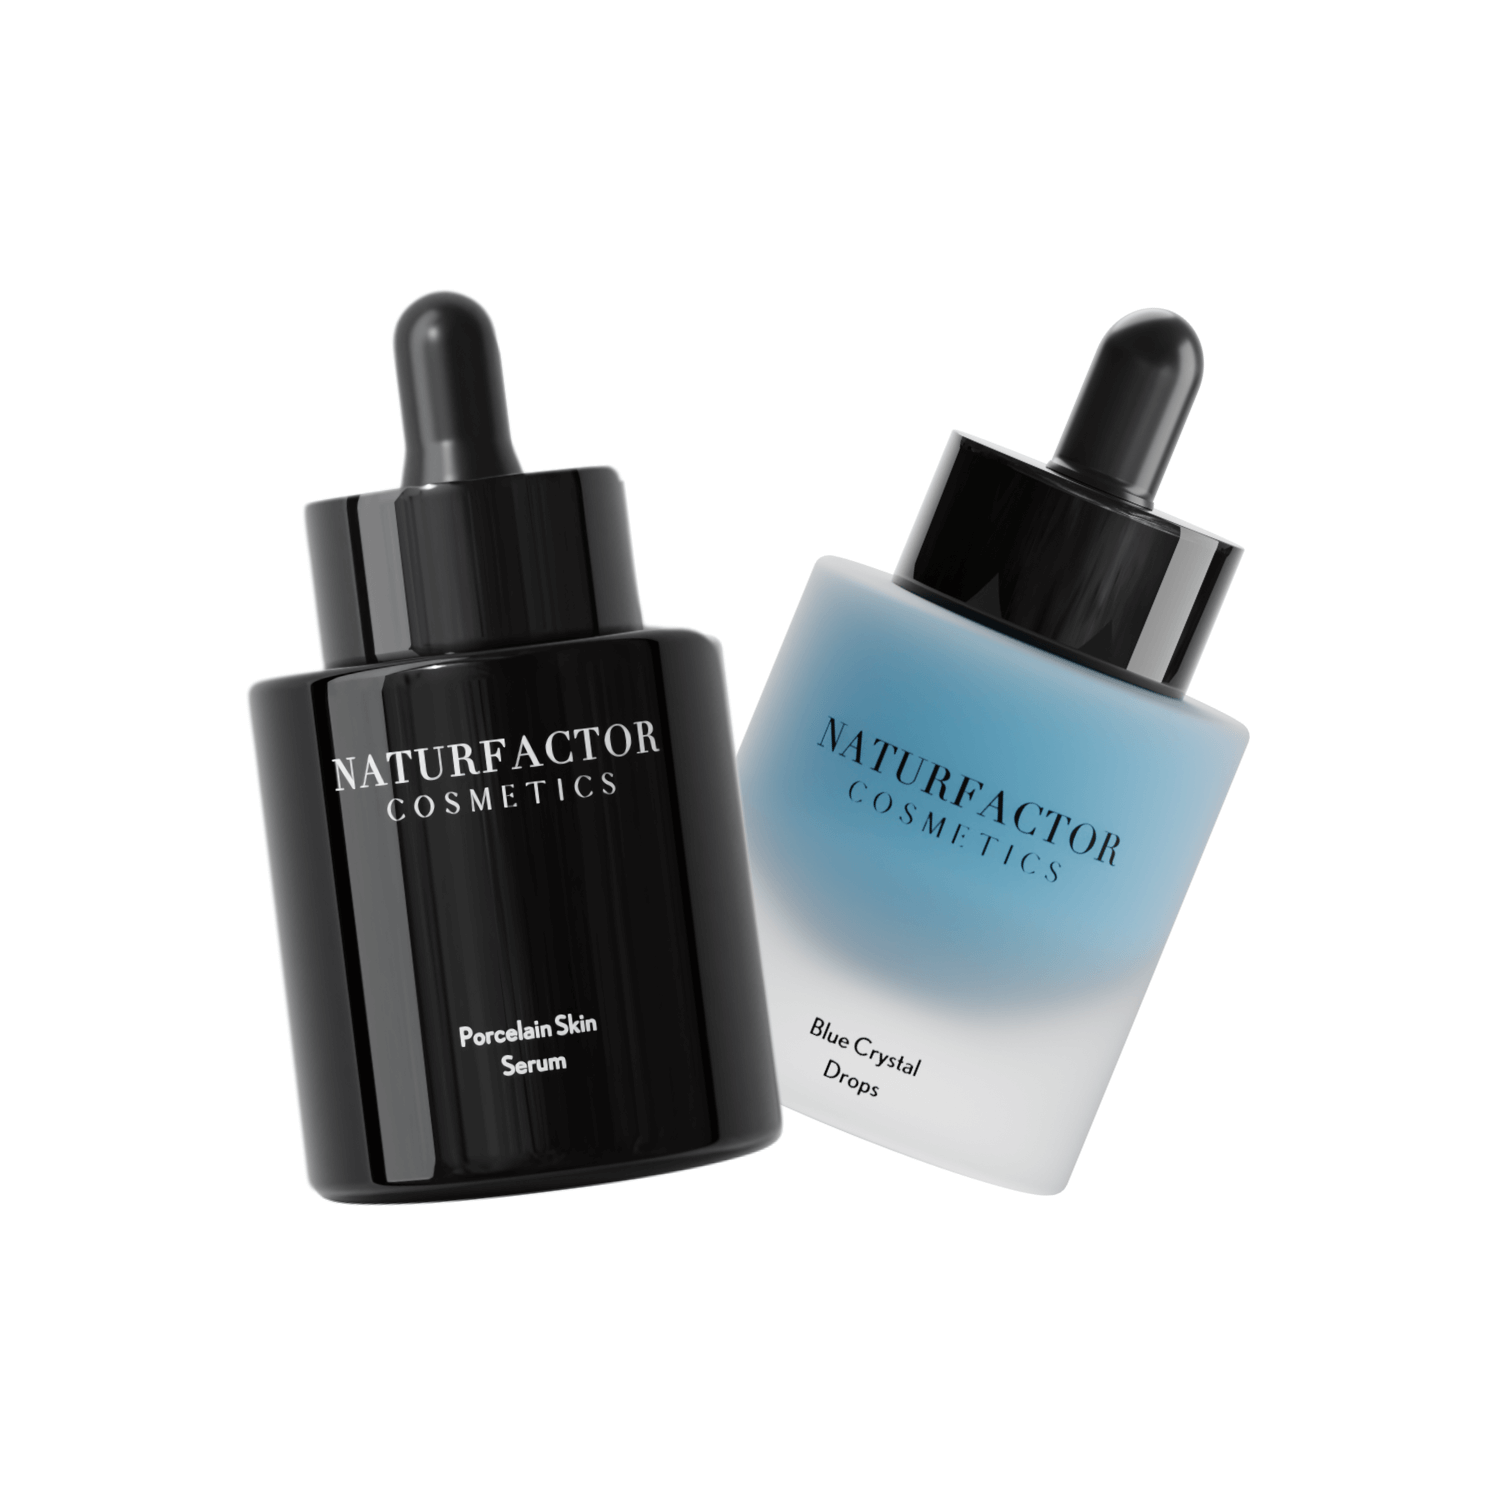 The Perfect Duo - Naturfactor® Cosmetics